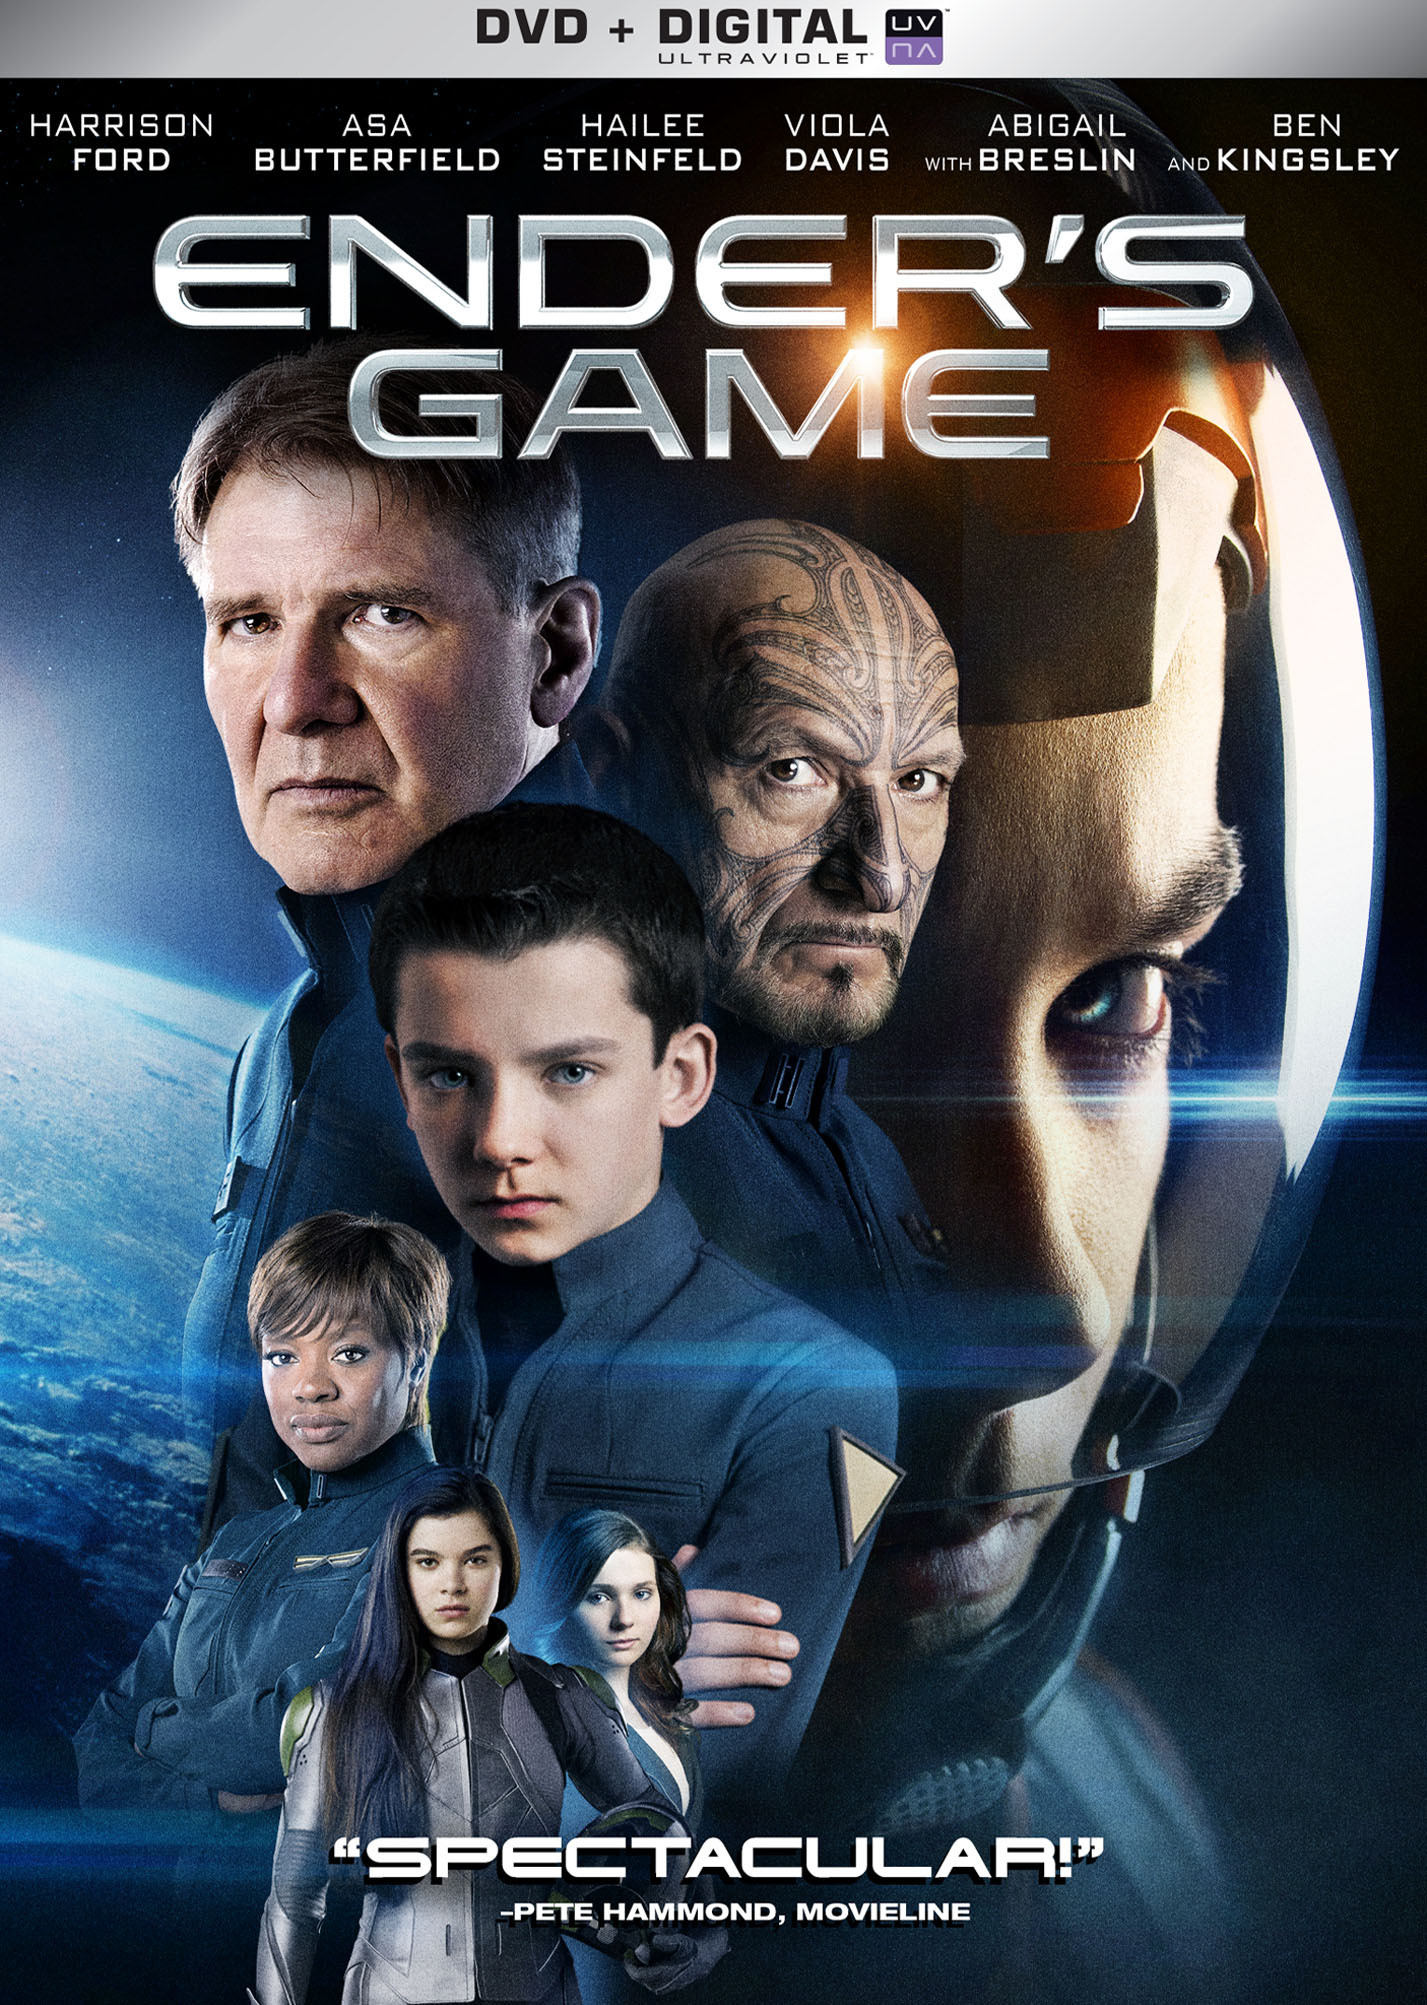 Ender's Game (DVD + Digital Copy) - DVD [ 2013 ]  - Sci Fi Movies On DVD - Movies On GRUV